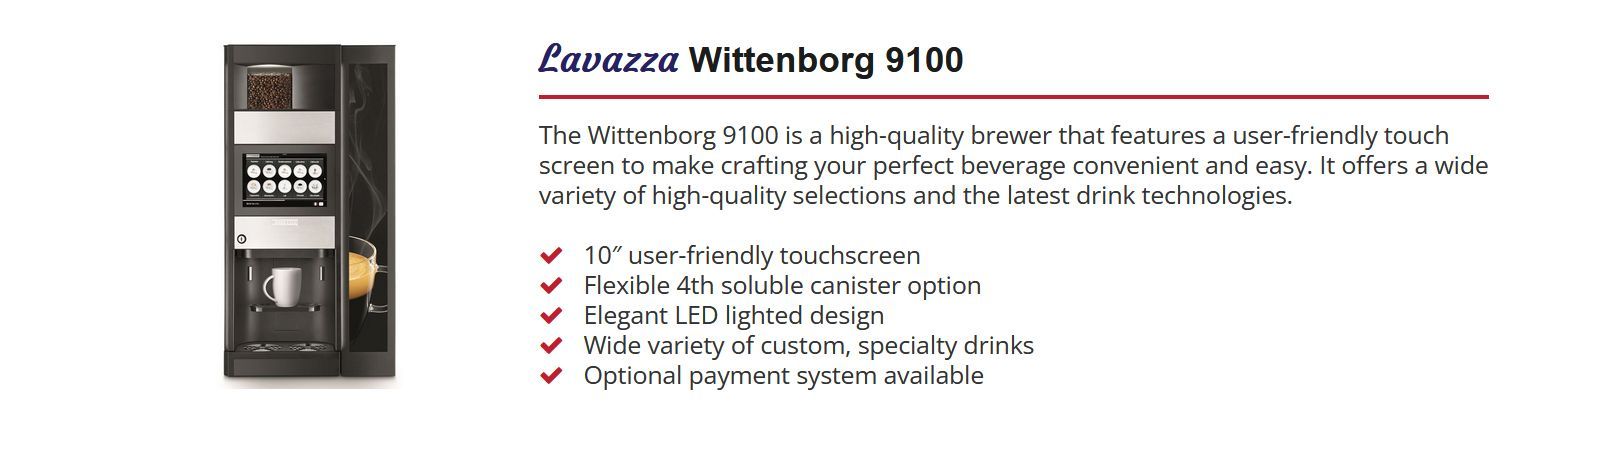 Lavazza Wittenborg 9100 Coffee Machine